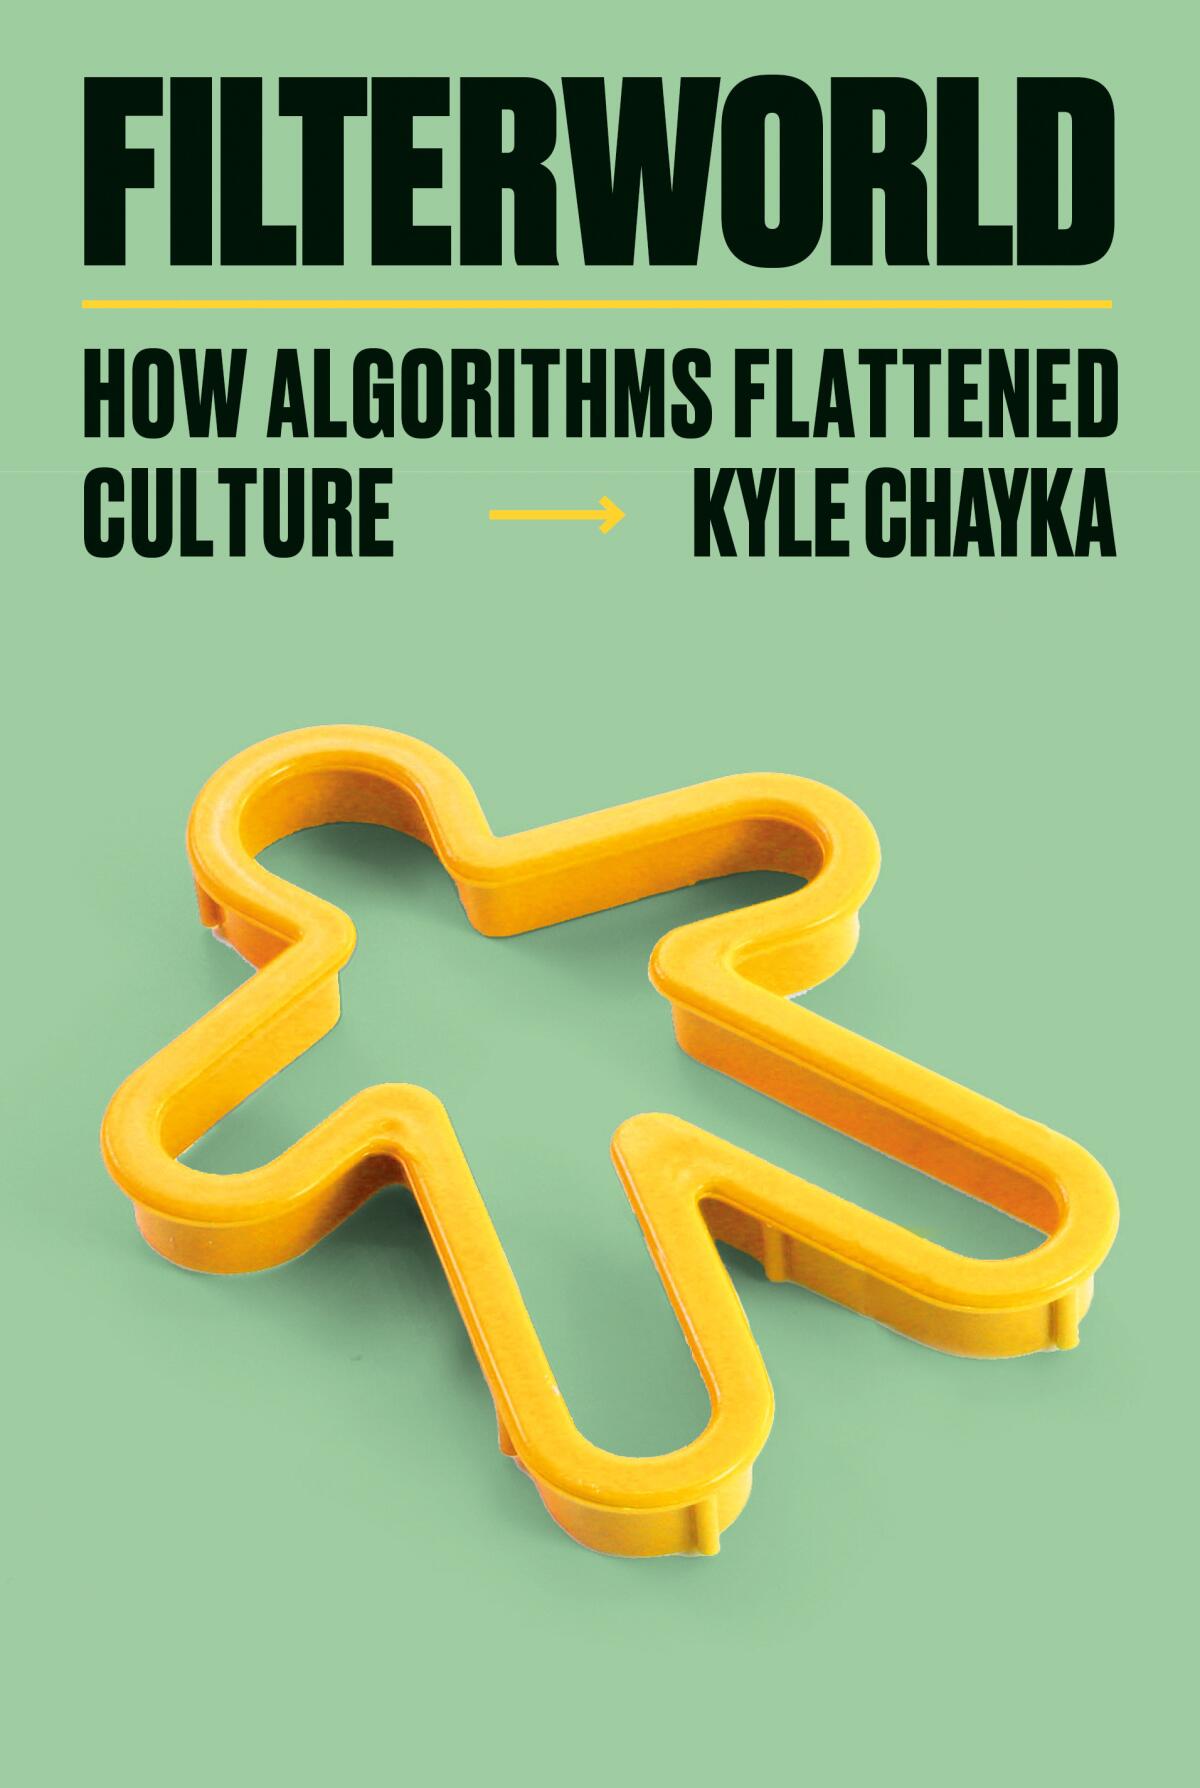 "Filterworld: How Algorithms Flattened Culture" by Kyle Chayka